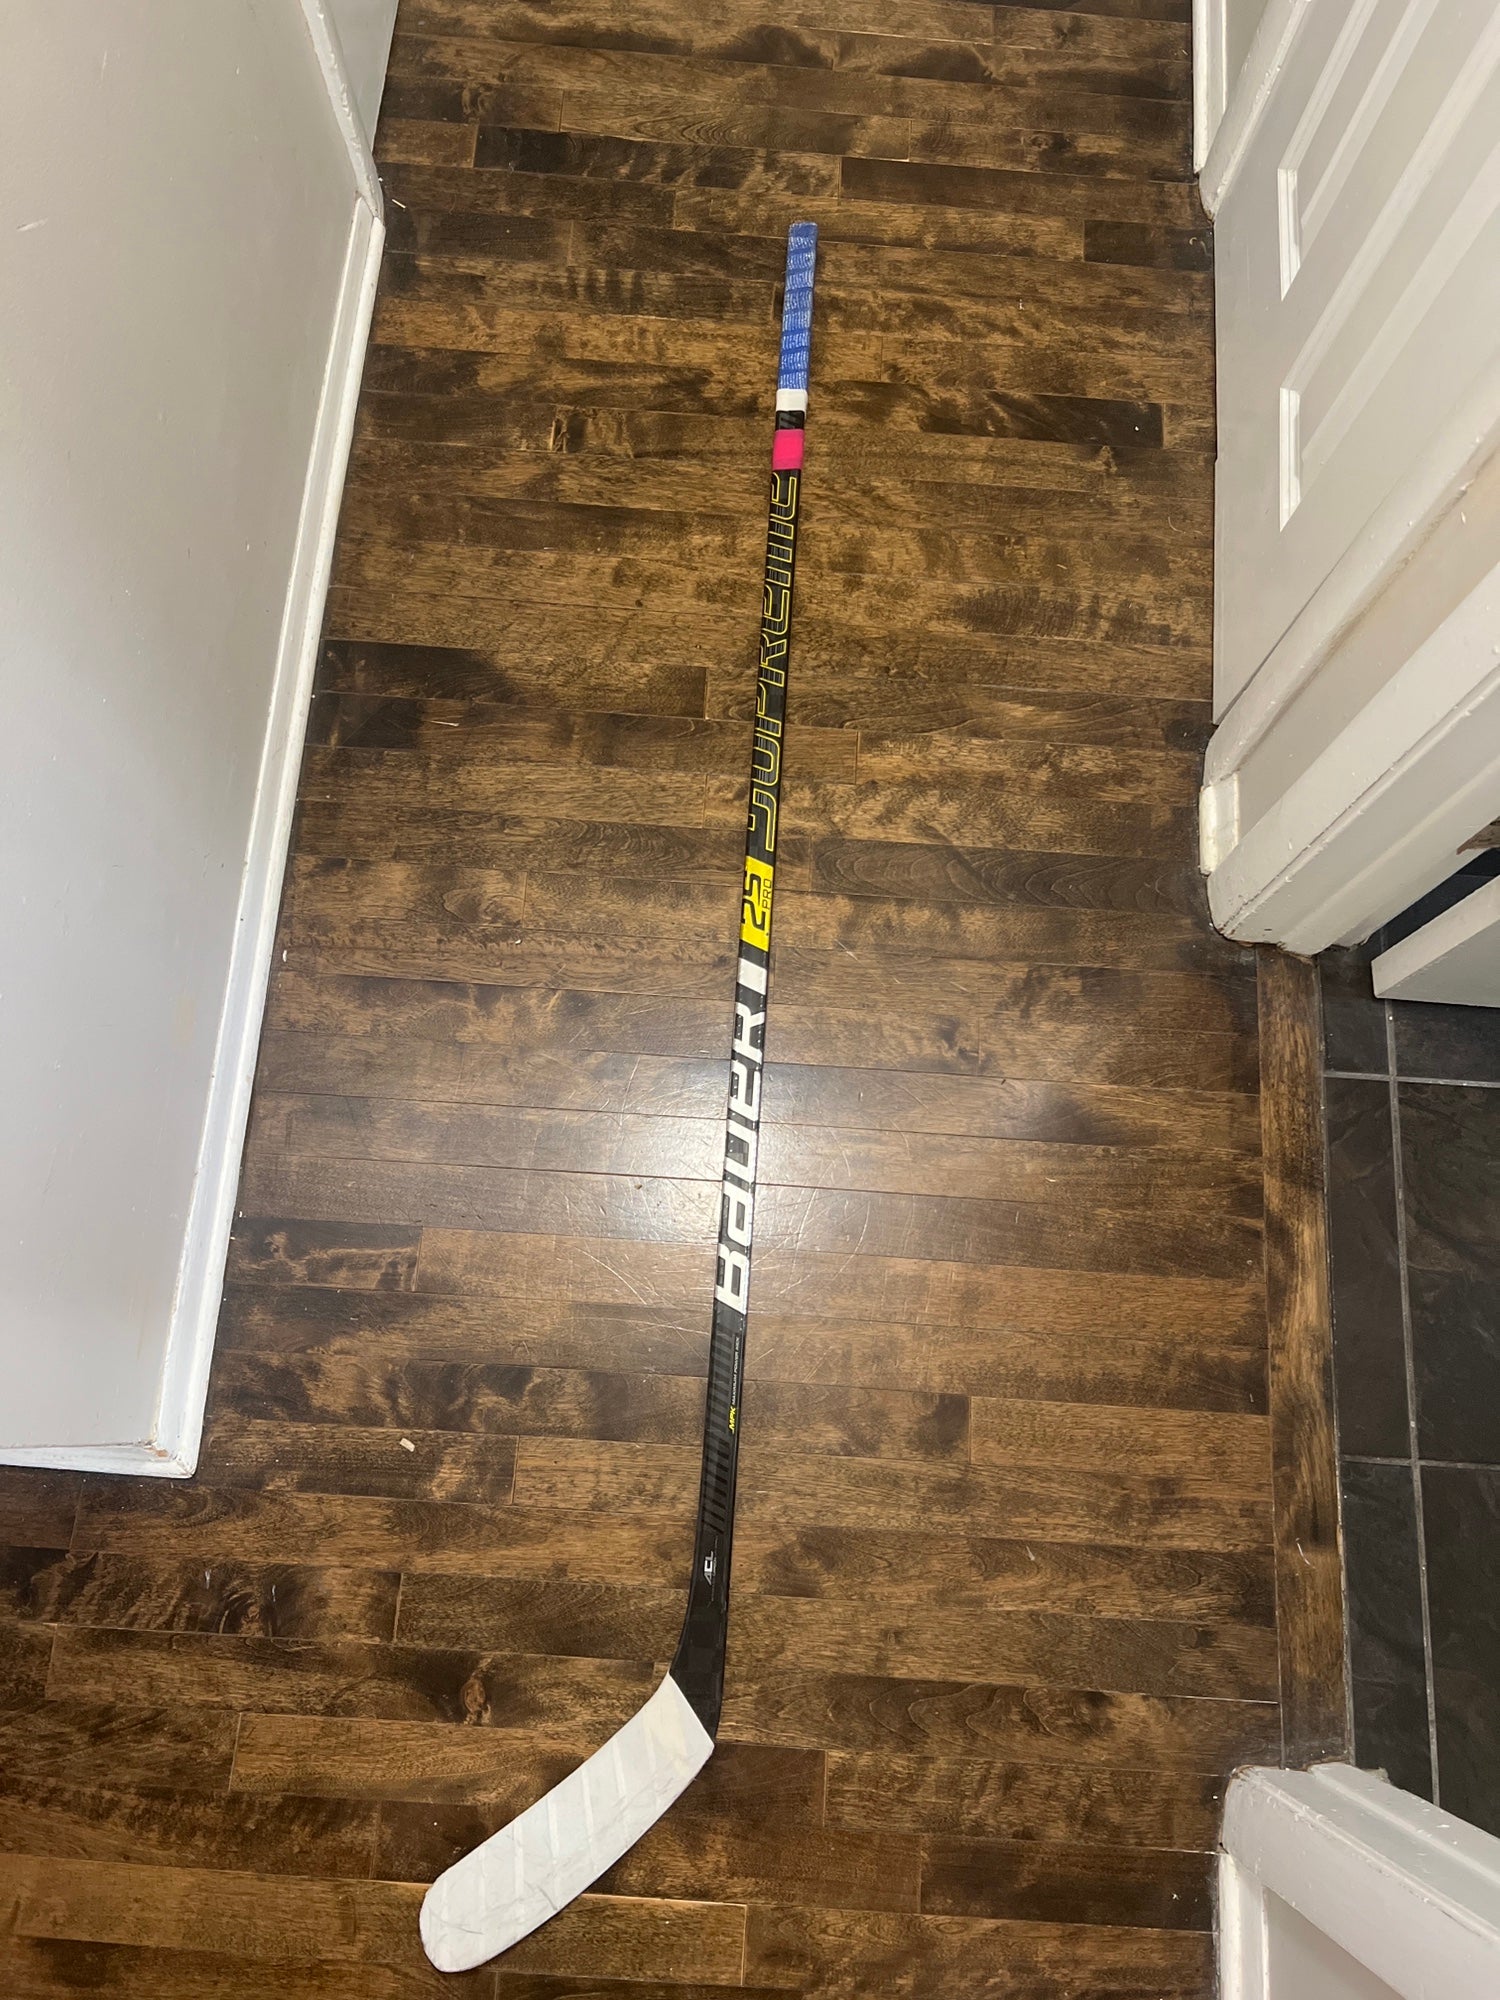 William Nylander Game Used 6IX Skyline Stick 21-22 Season (Bauer Supre – Pro  Source Hockey